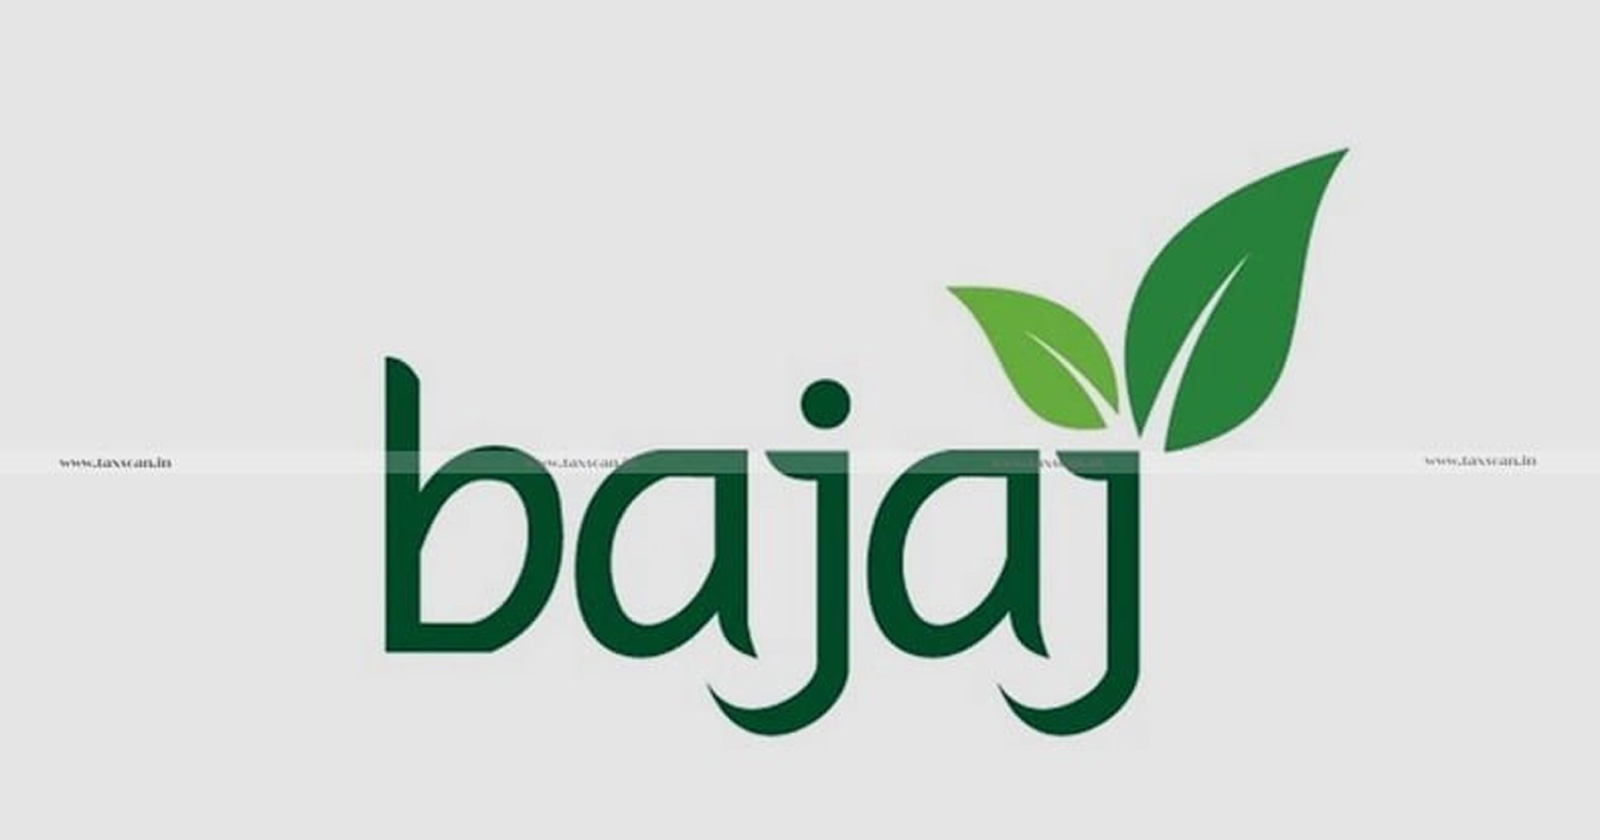 Relief - Bajaj Herbal - Service Tax - Advertising Agency Service - taxscan